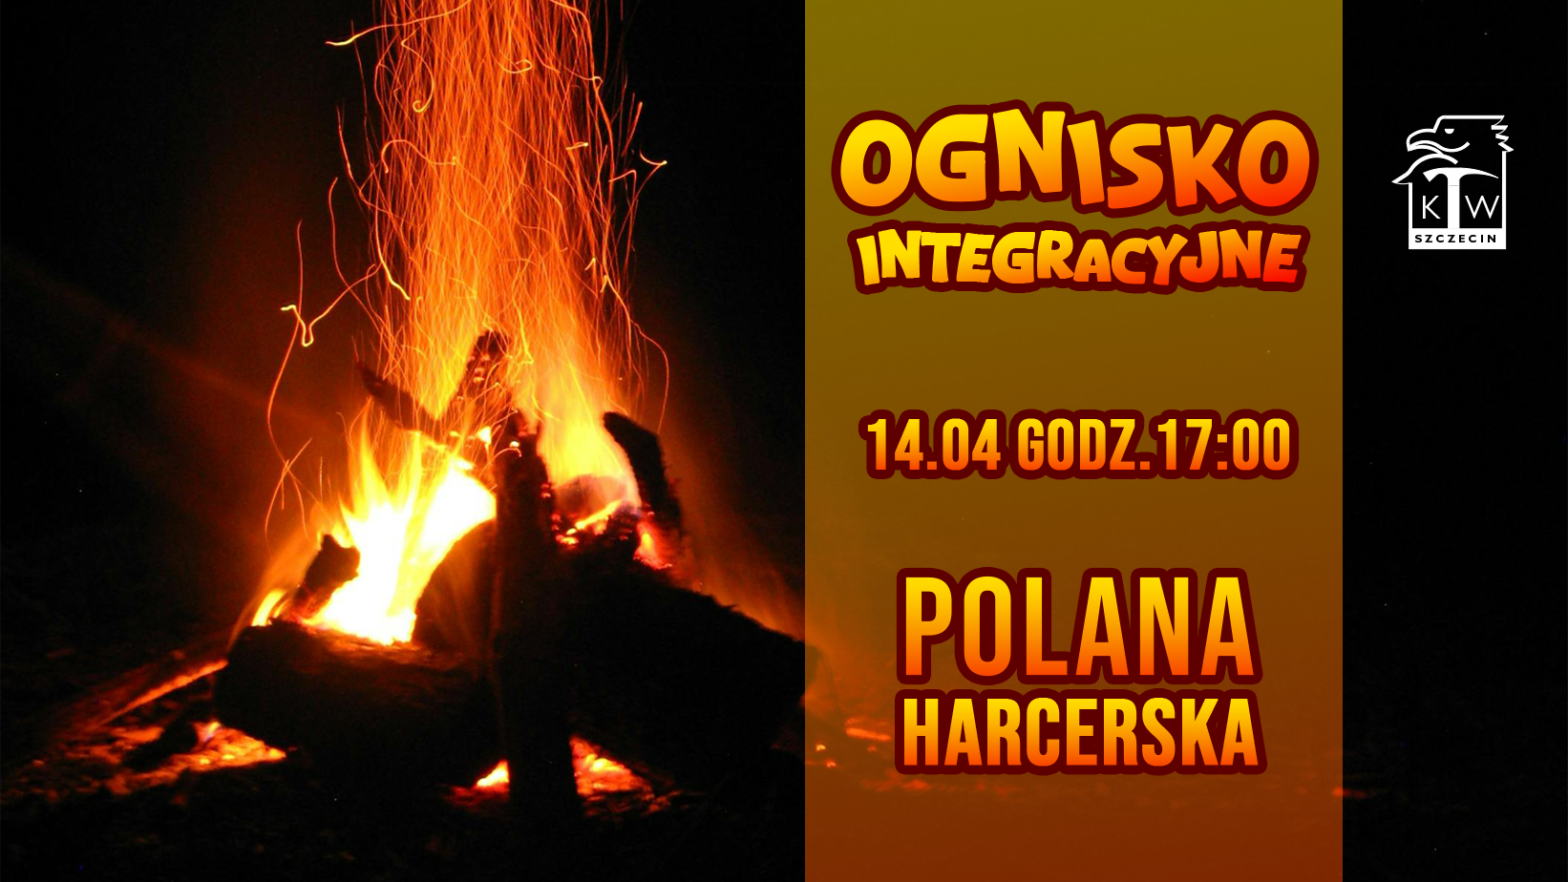 Klubowe ognisko integracyjne, Polana Harcerska // 14.04